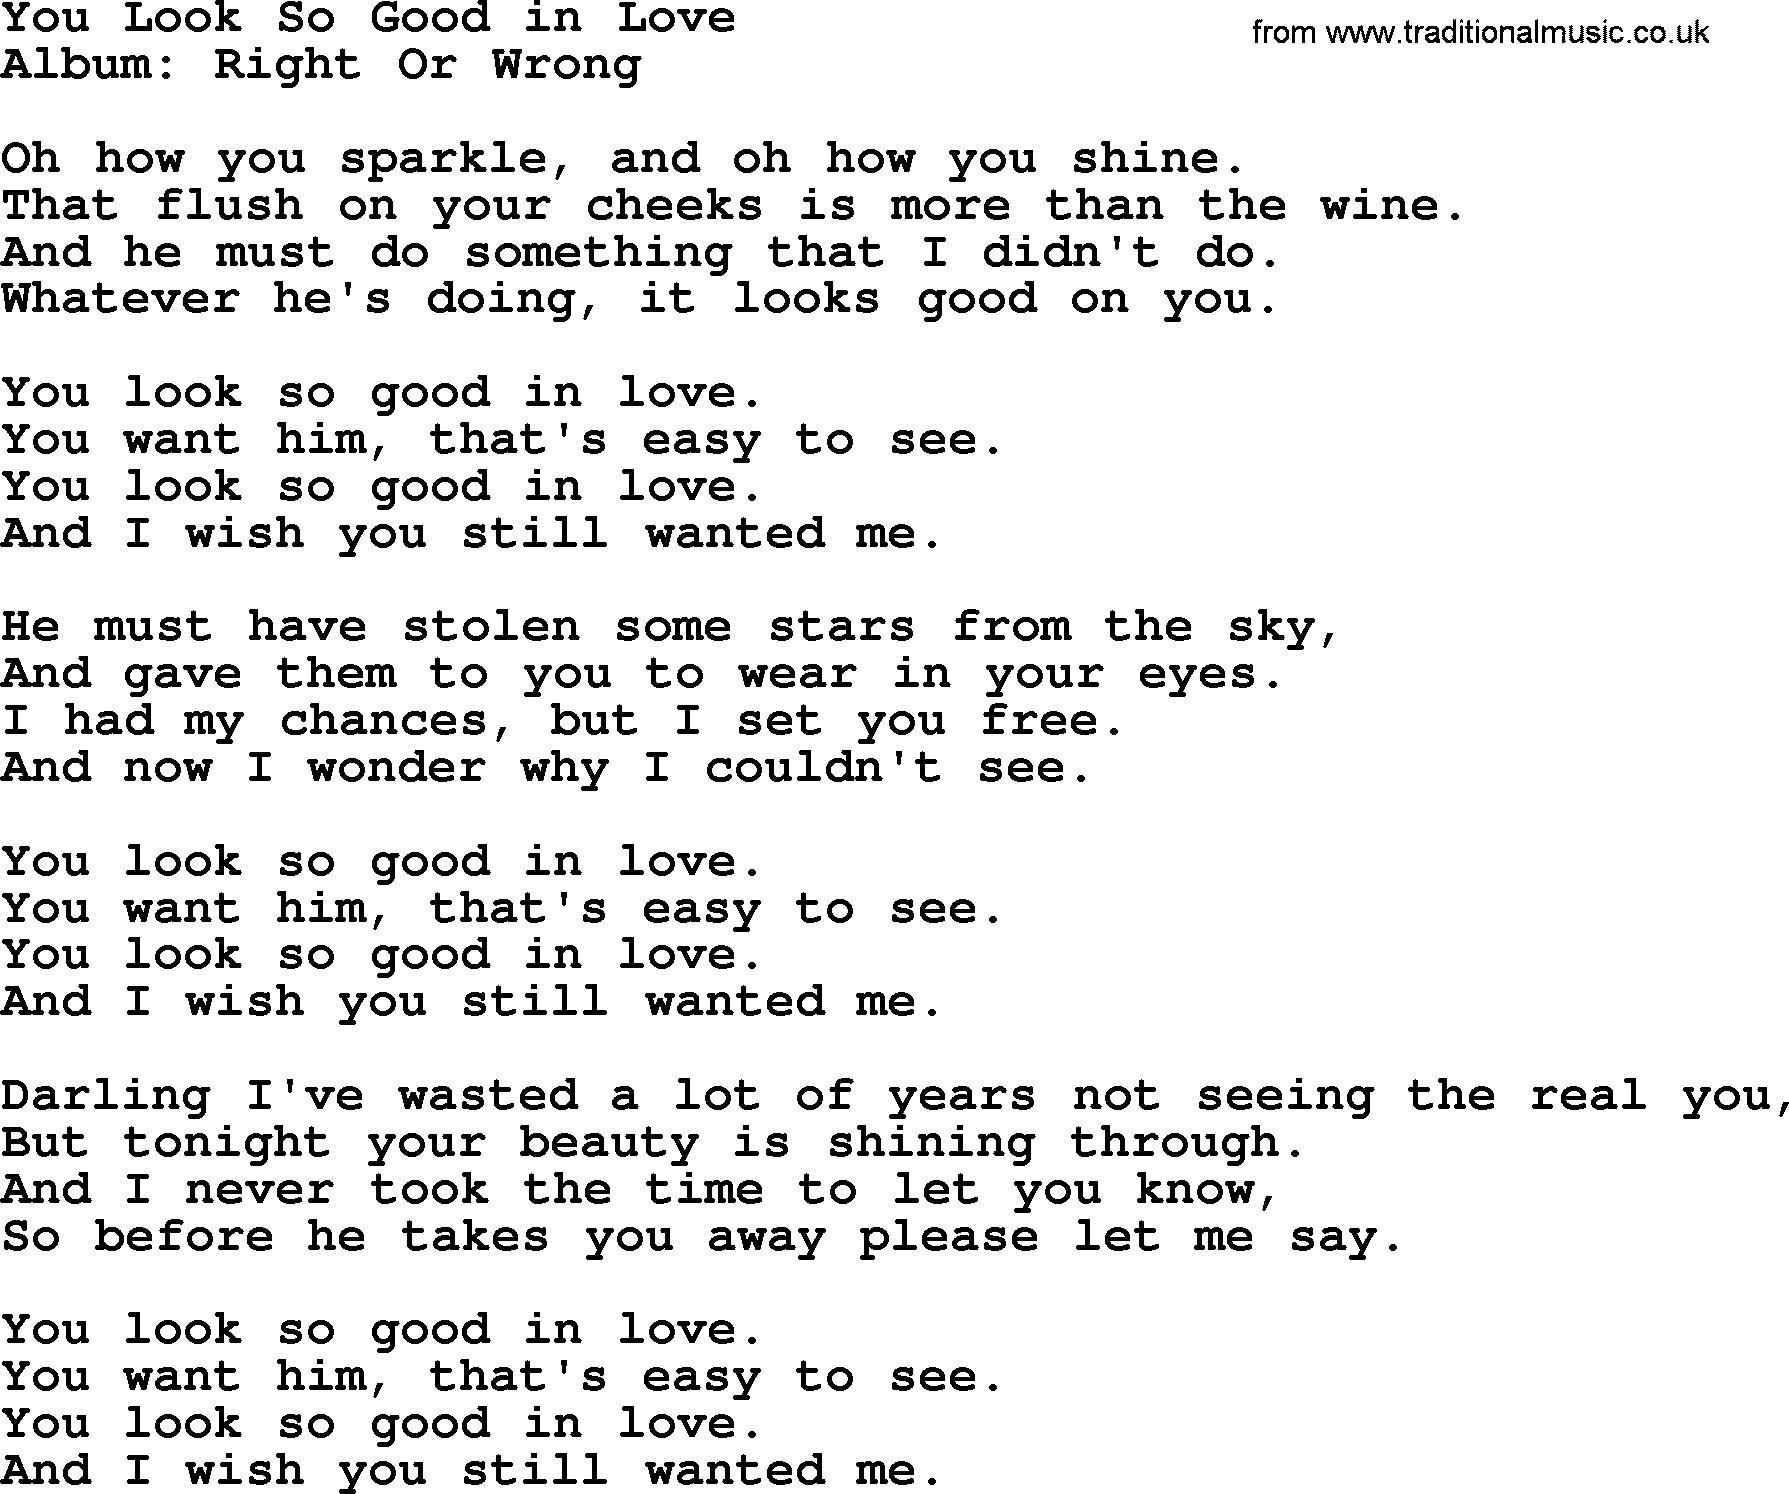 George Strait song: You Look So Good in Love, lyrics